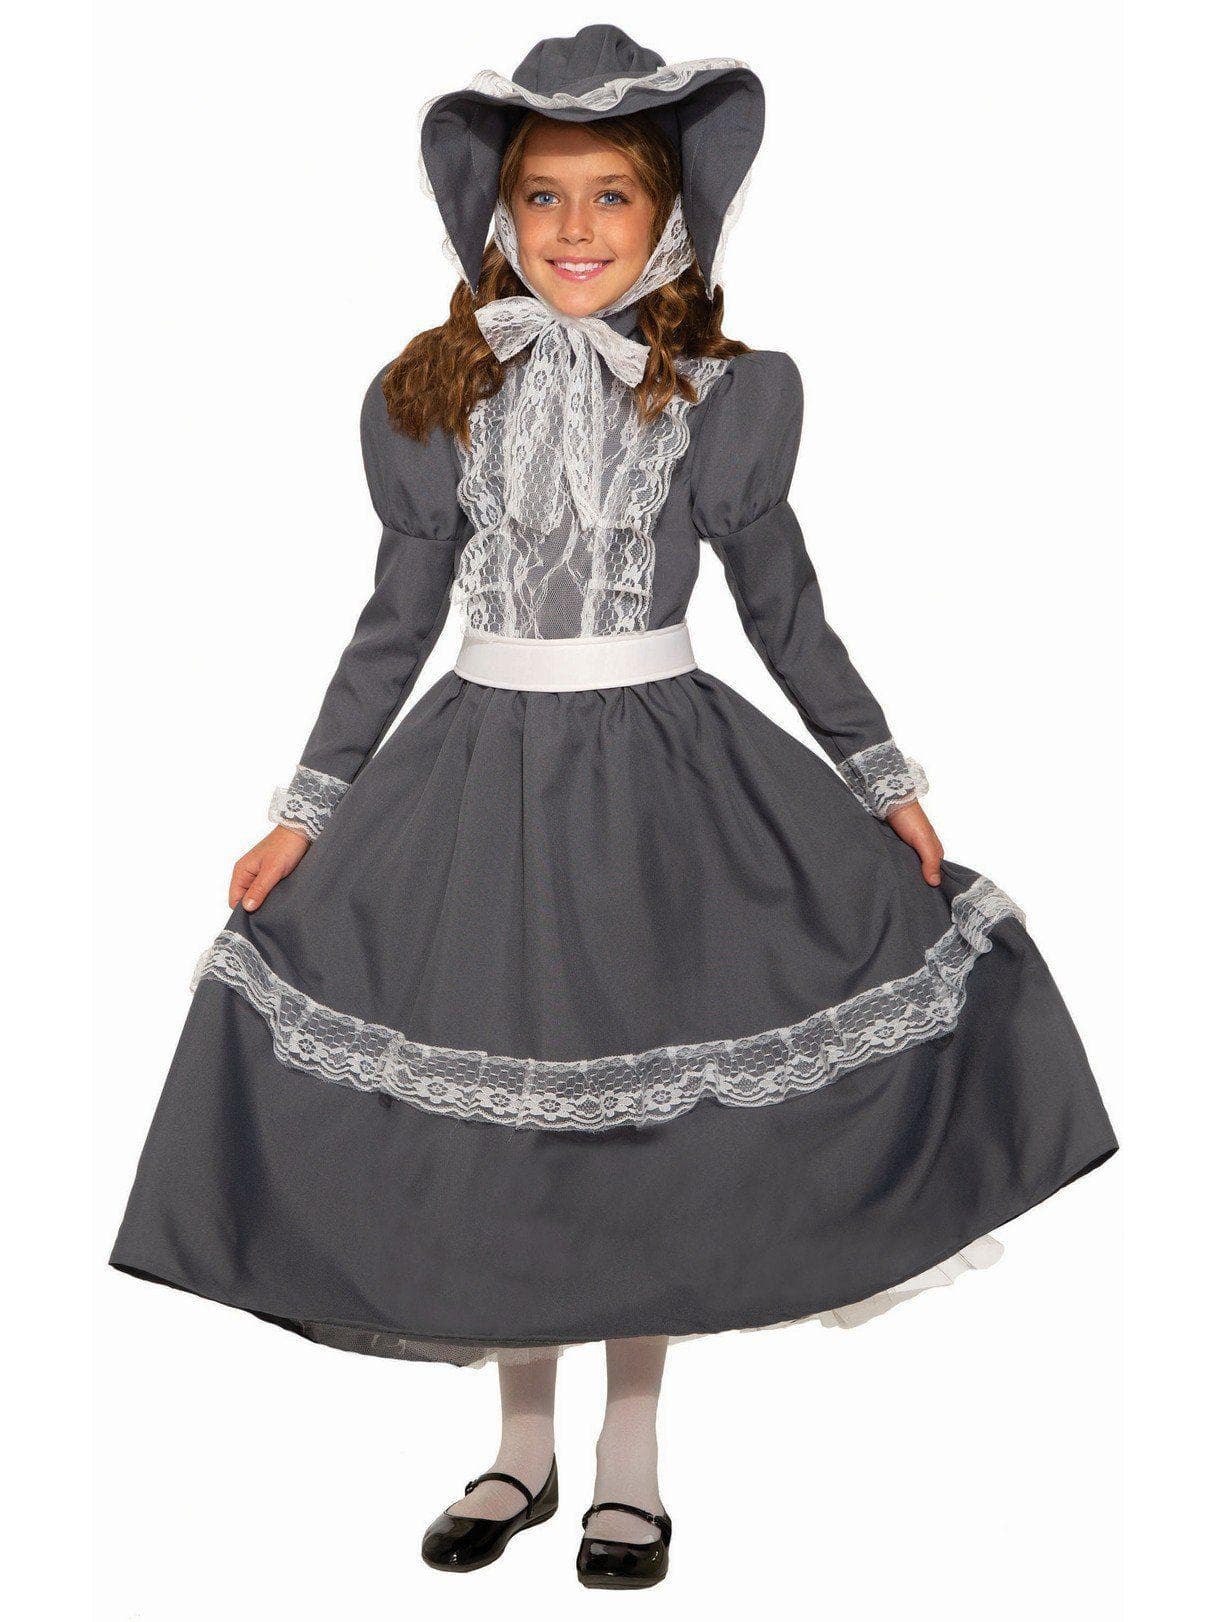 Kid's Prairie Girl Costume - costumes.com